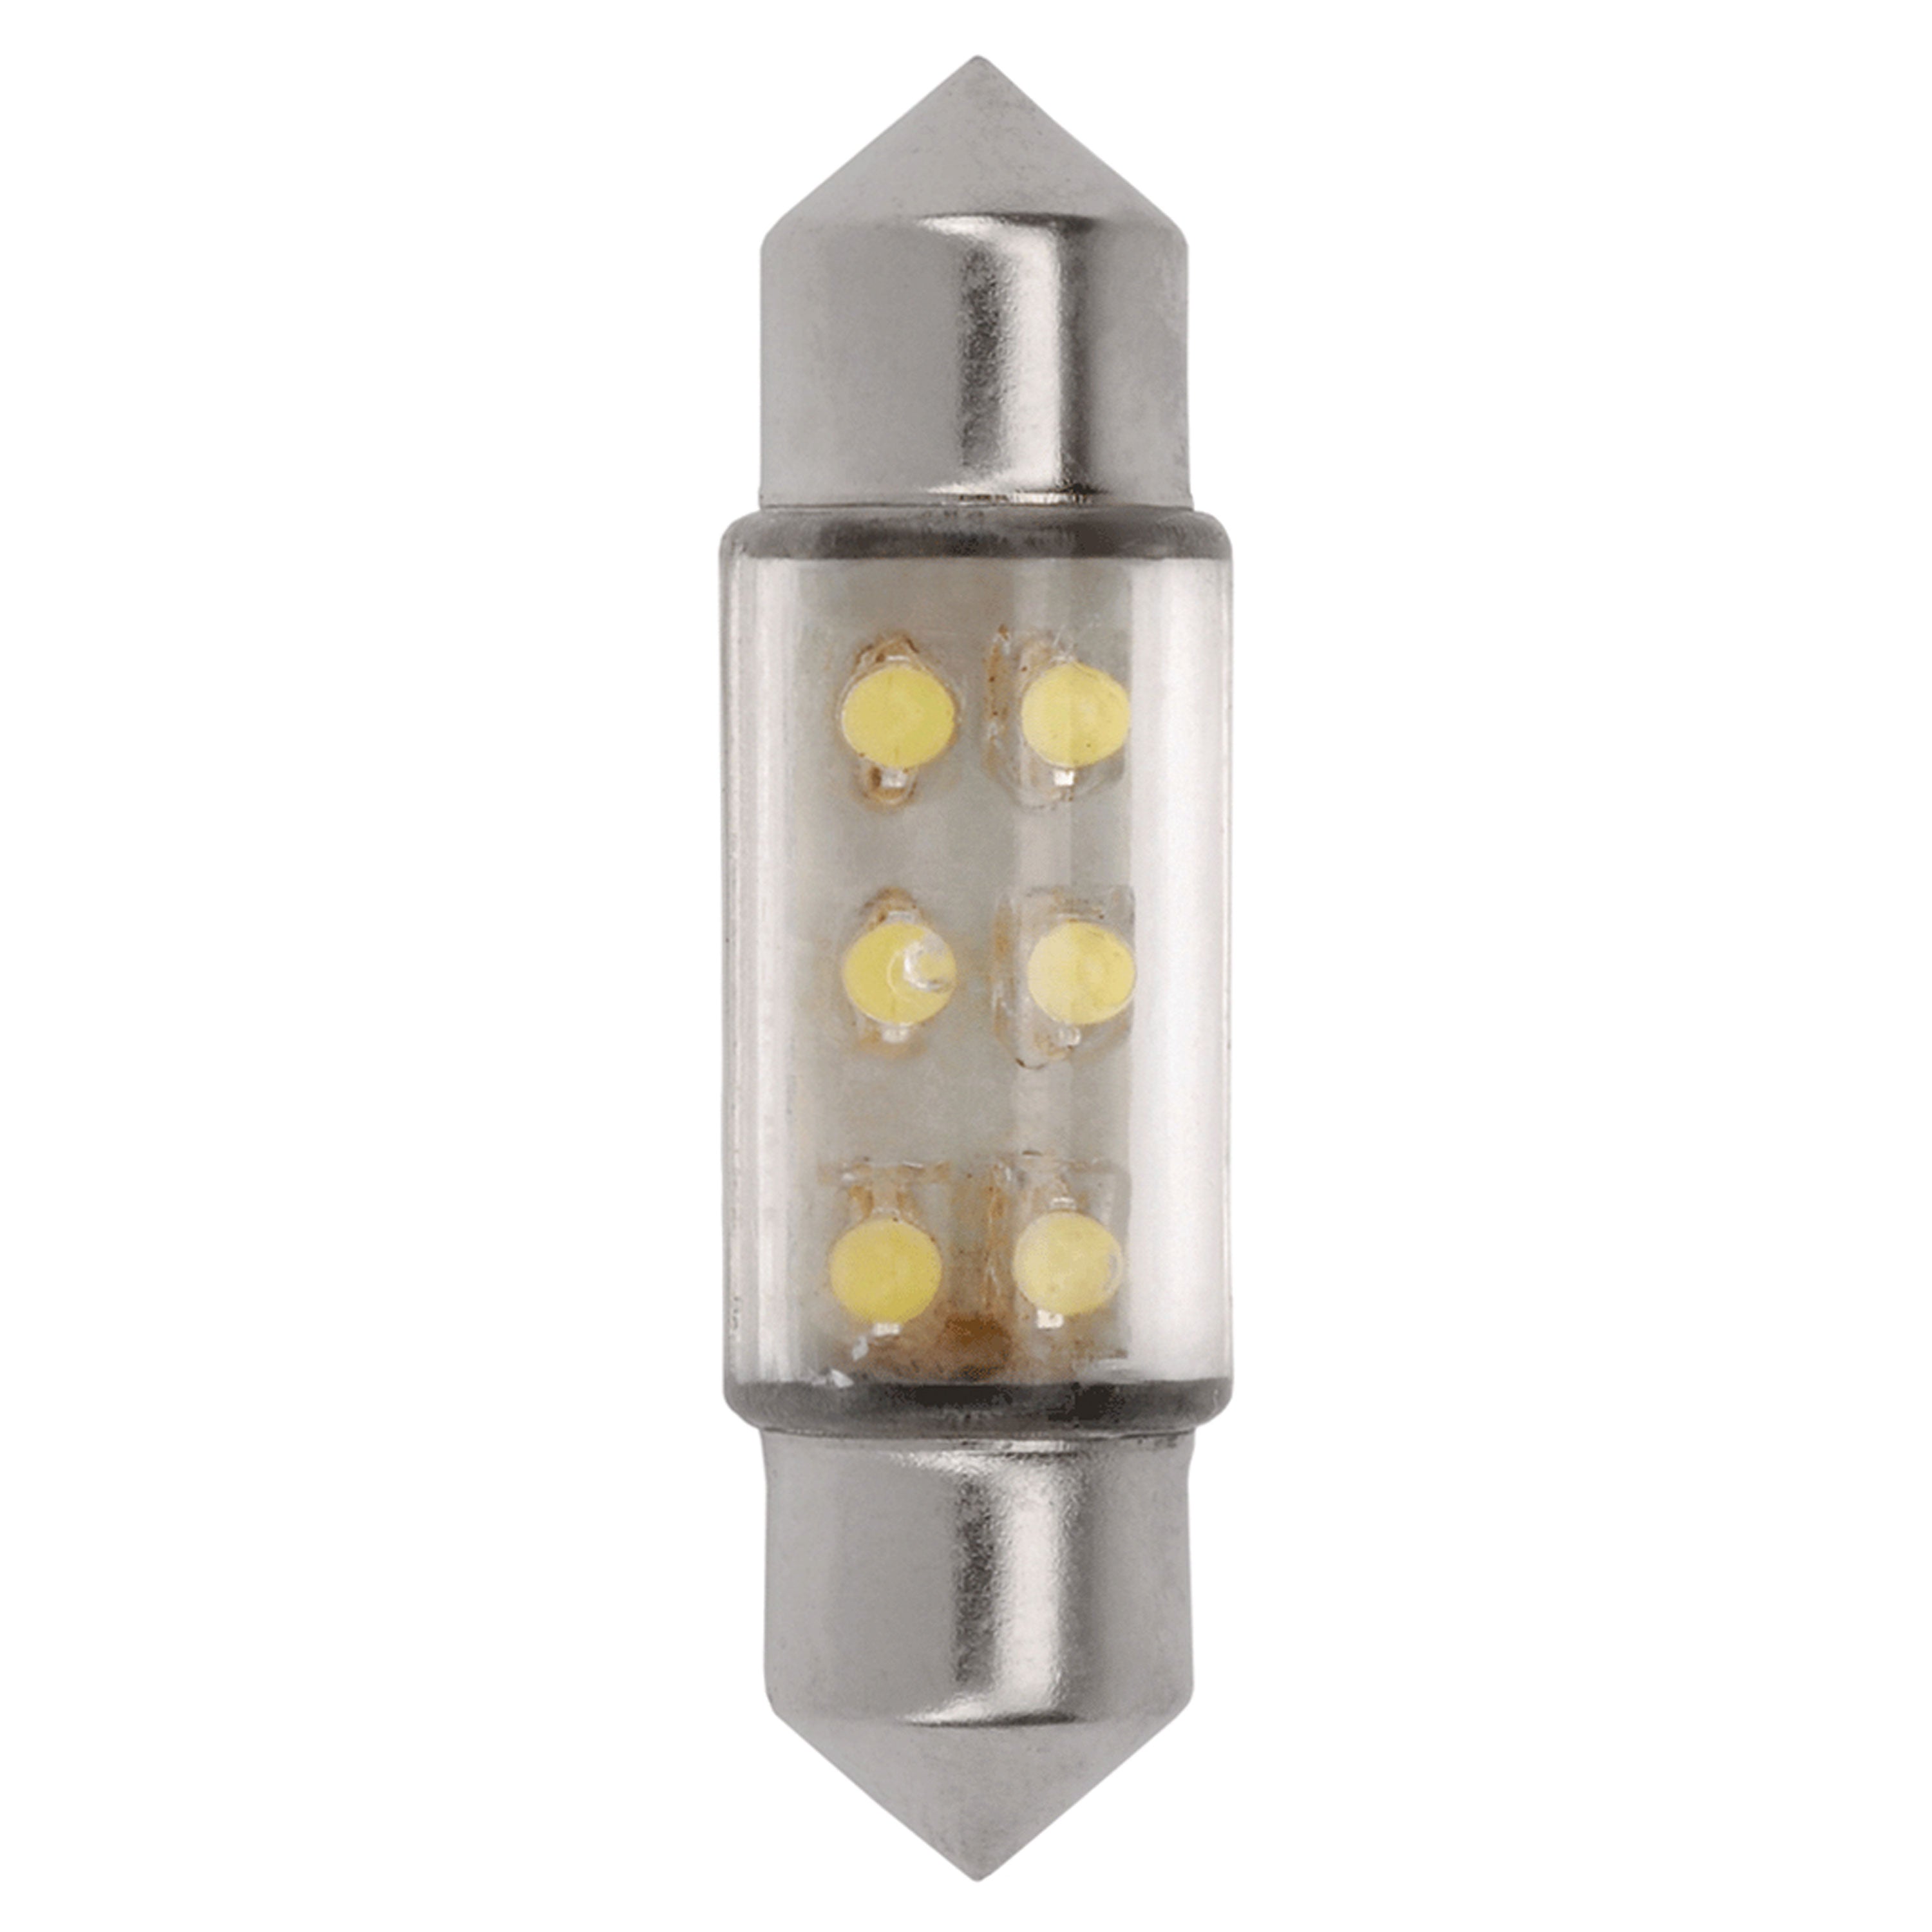 AP Products 016-1036-25R Star Lights 12V DC Revolution LED Light Bulbs - Red, 2 Pack